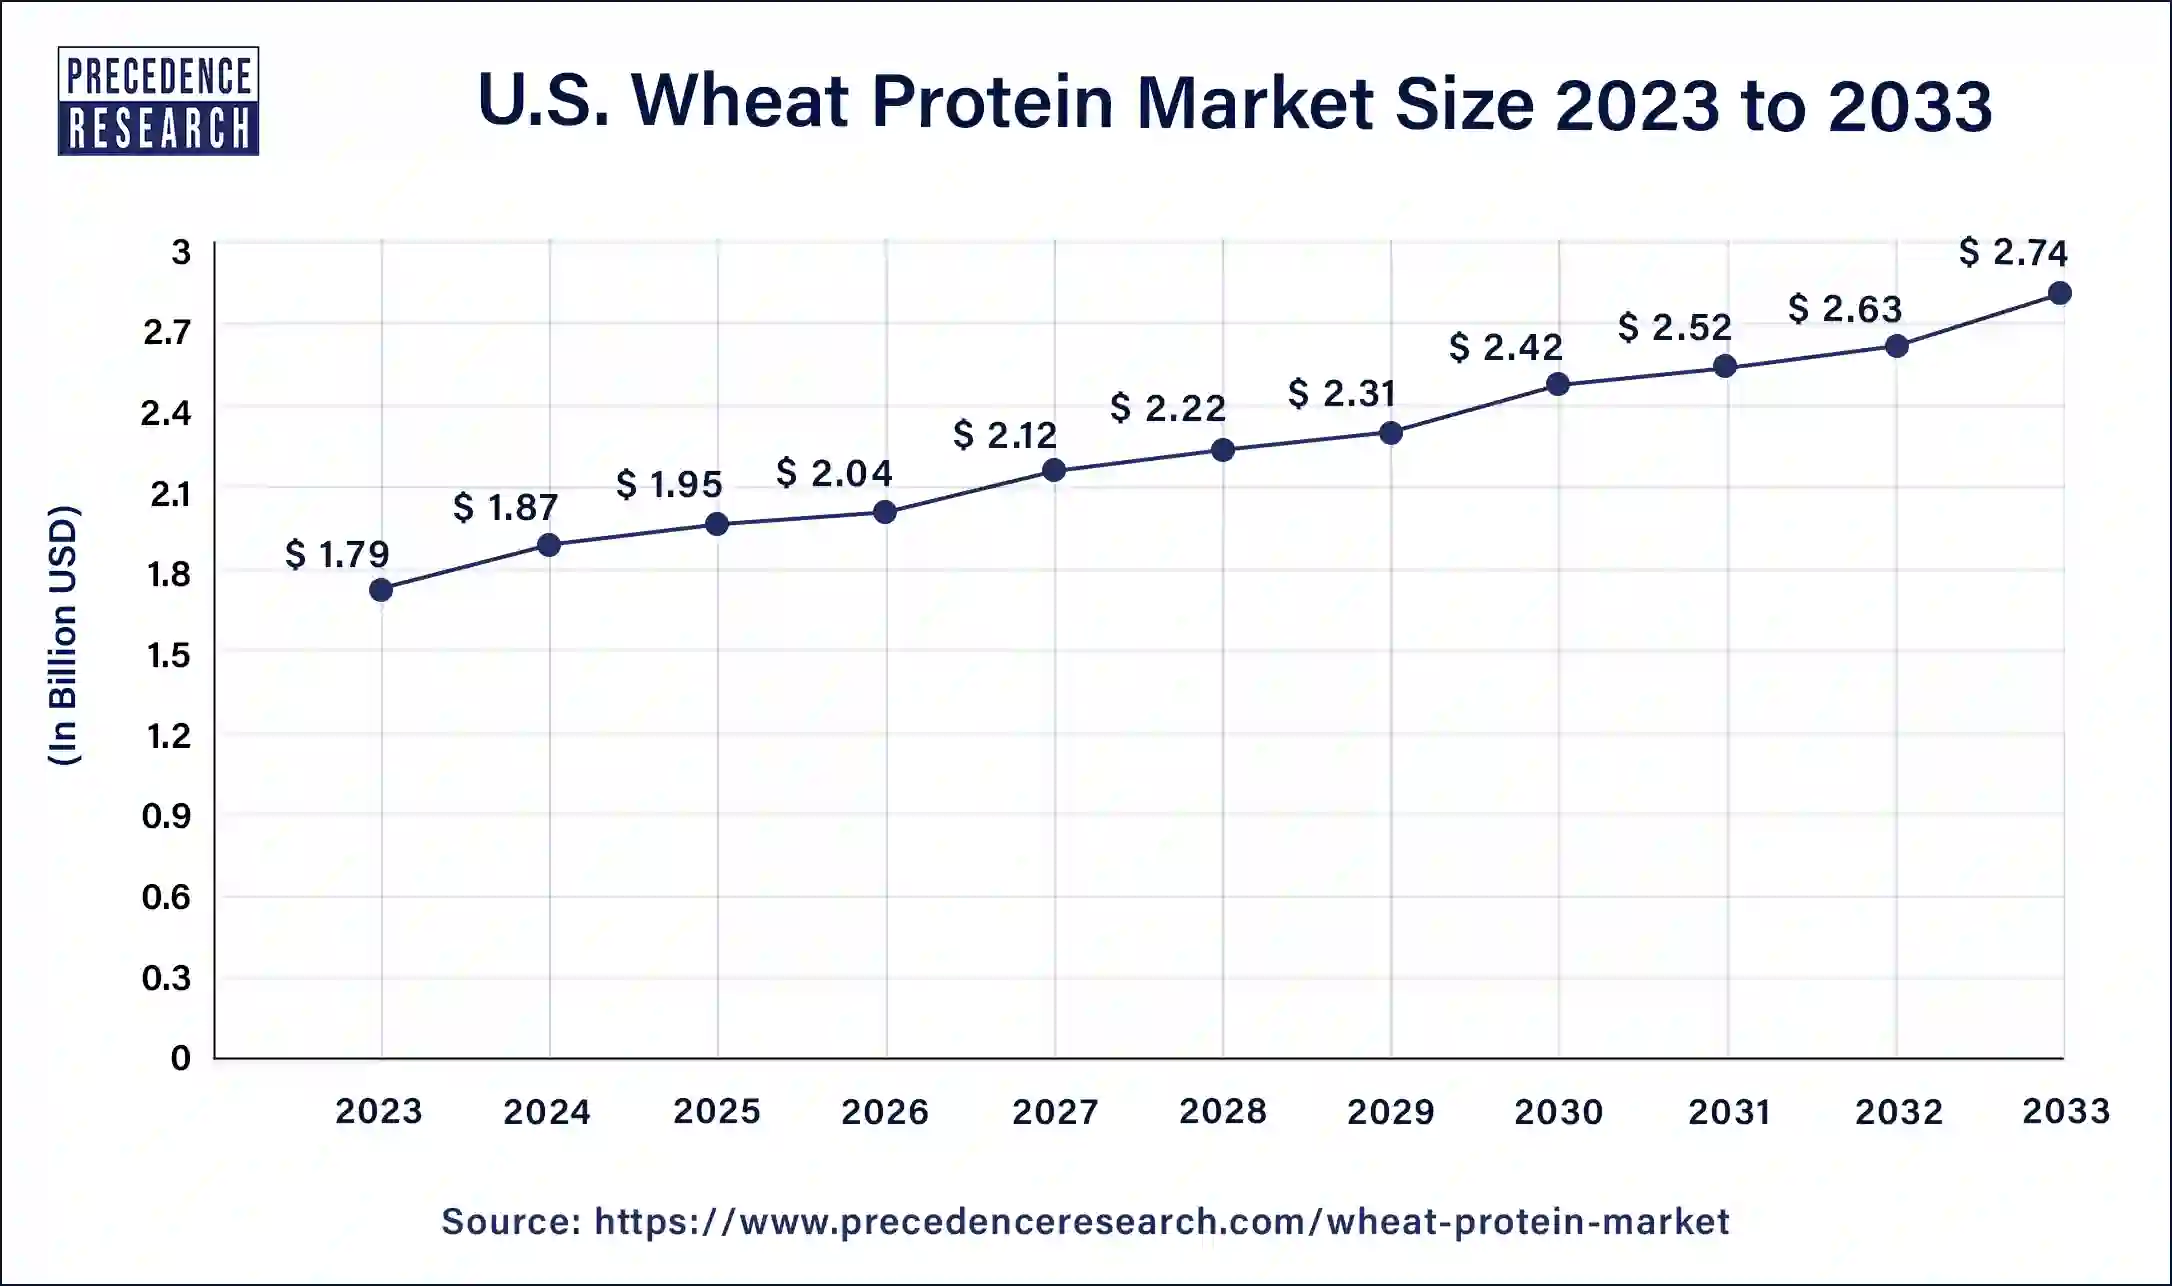 U.S. Wheat Protein Market Size 2023 to 2033